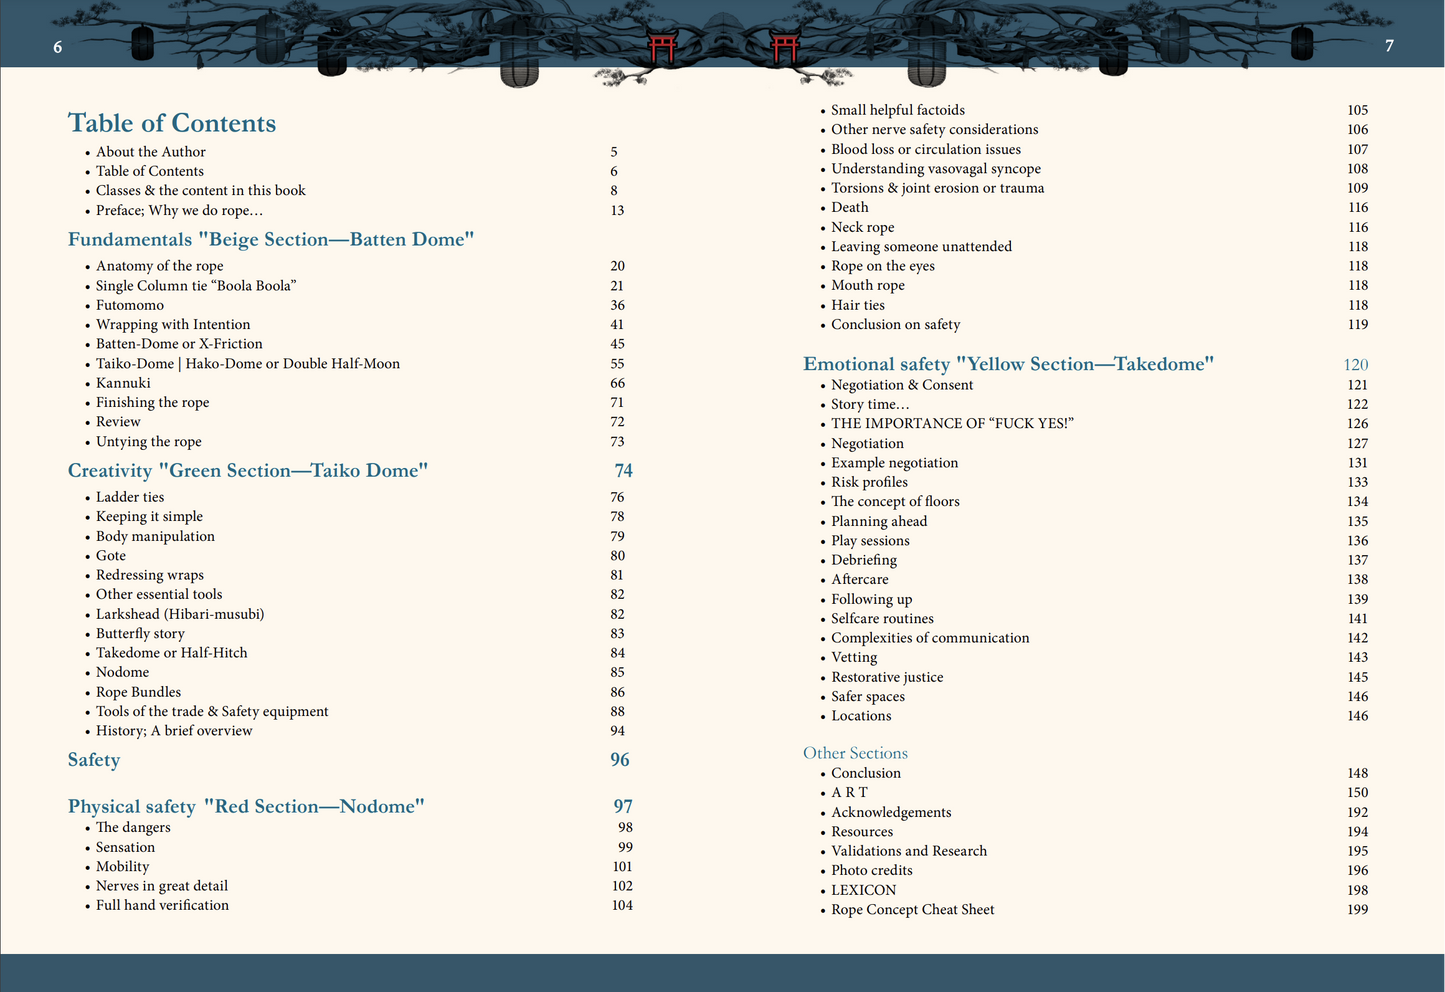 Fundamentals Table of contents